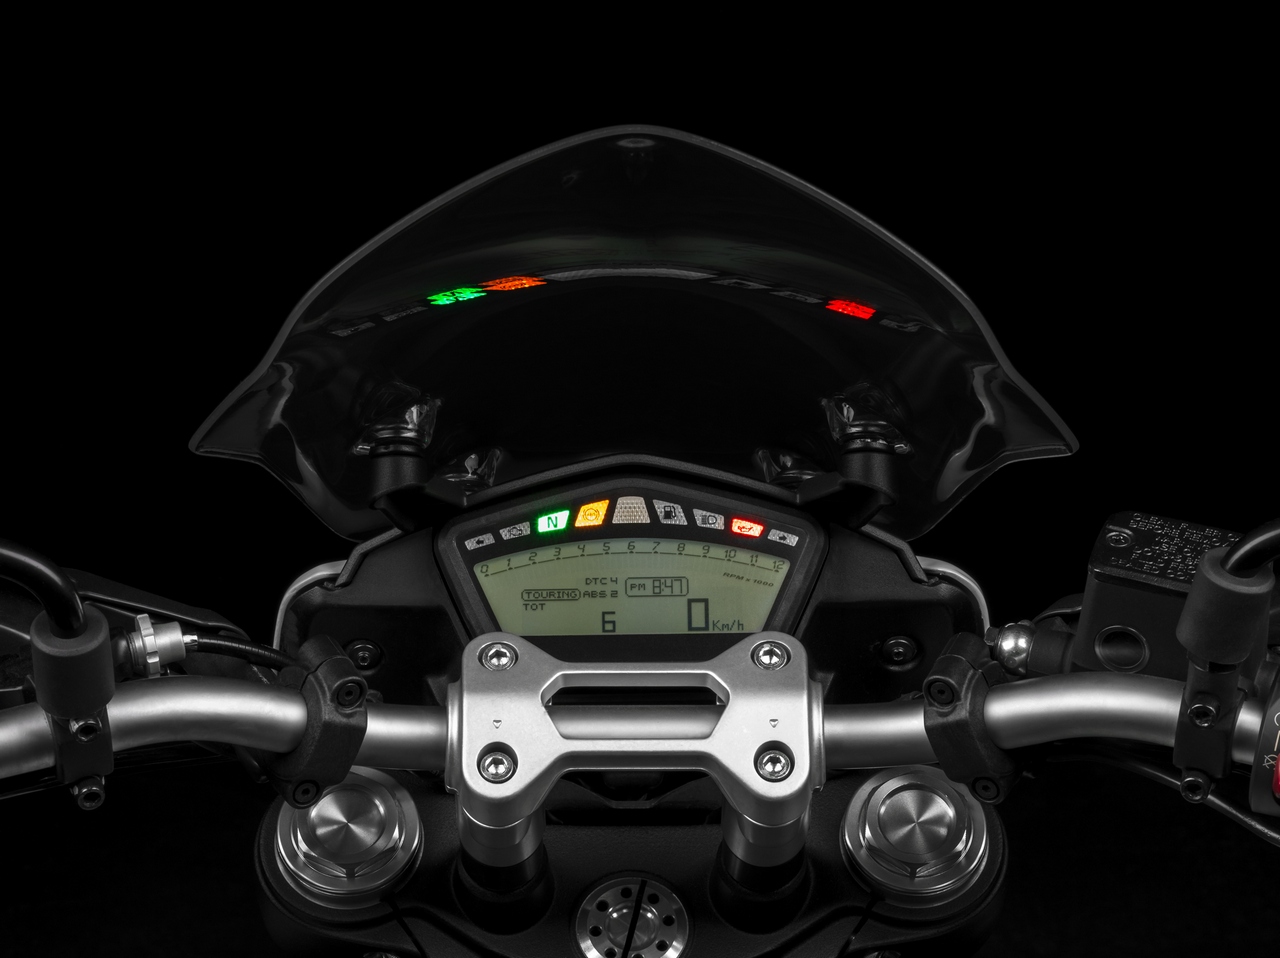 Ducati Hypermotard MY2013